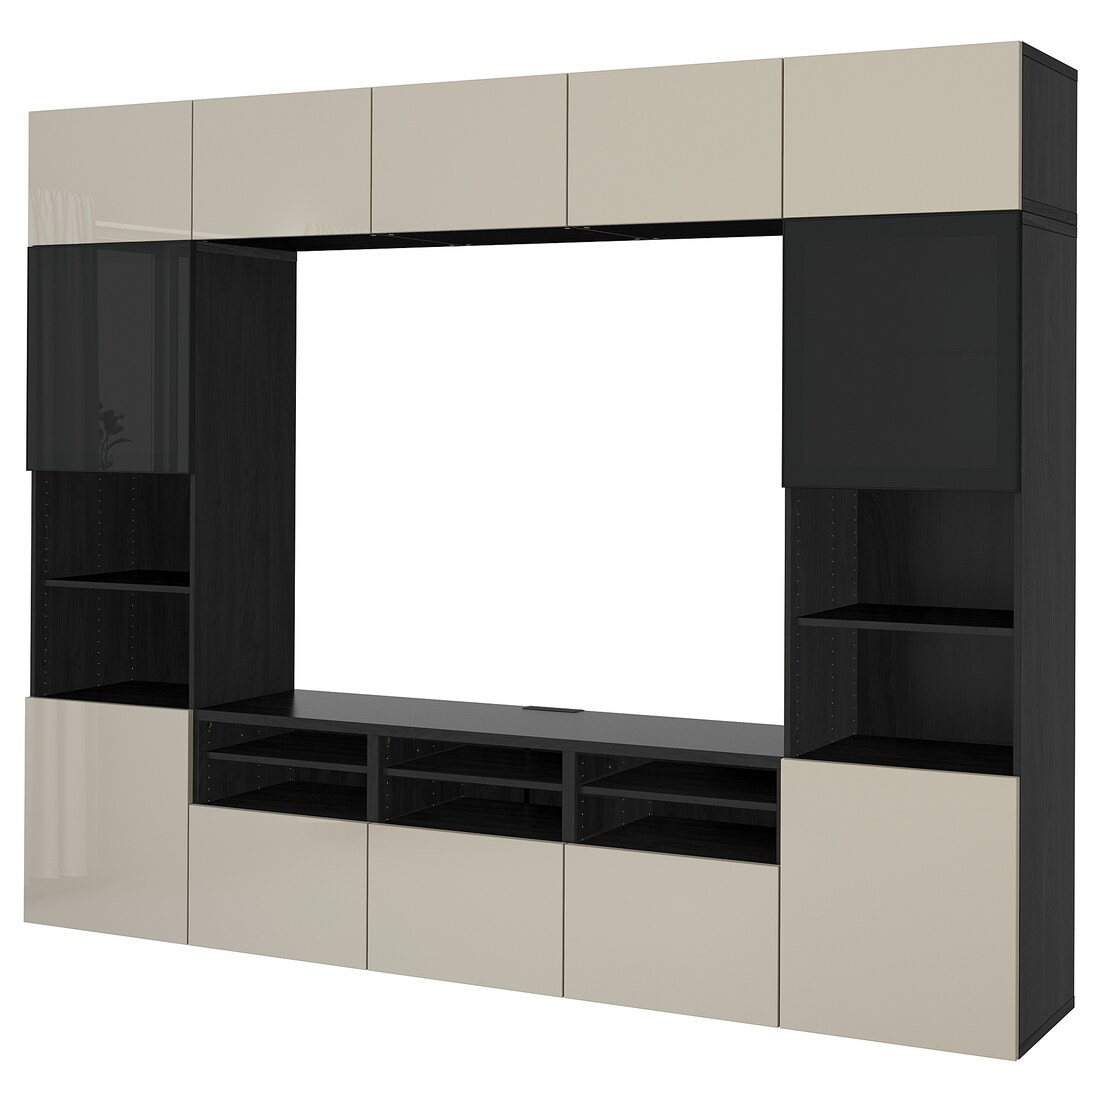 IKEA BESTÅ БЕСТО Комбинация для ТВ / стеклянные двери, черно-коричневый / Selsviken глянцевый / бежевое дымчатое стекло, 300x42x231 см 49411024 494.110.24